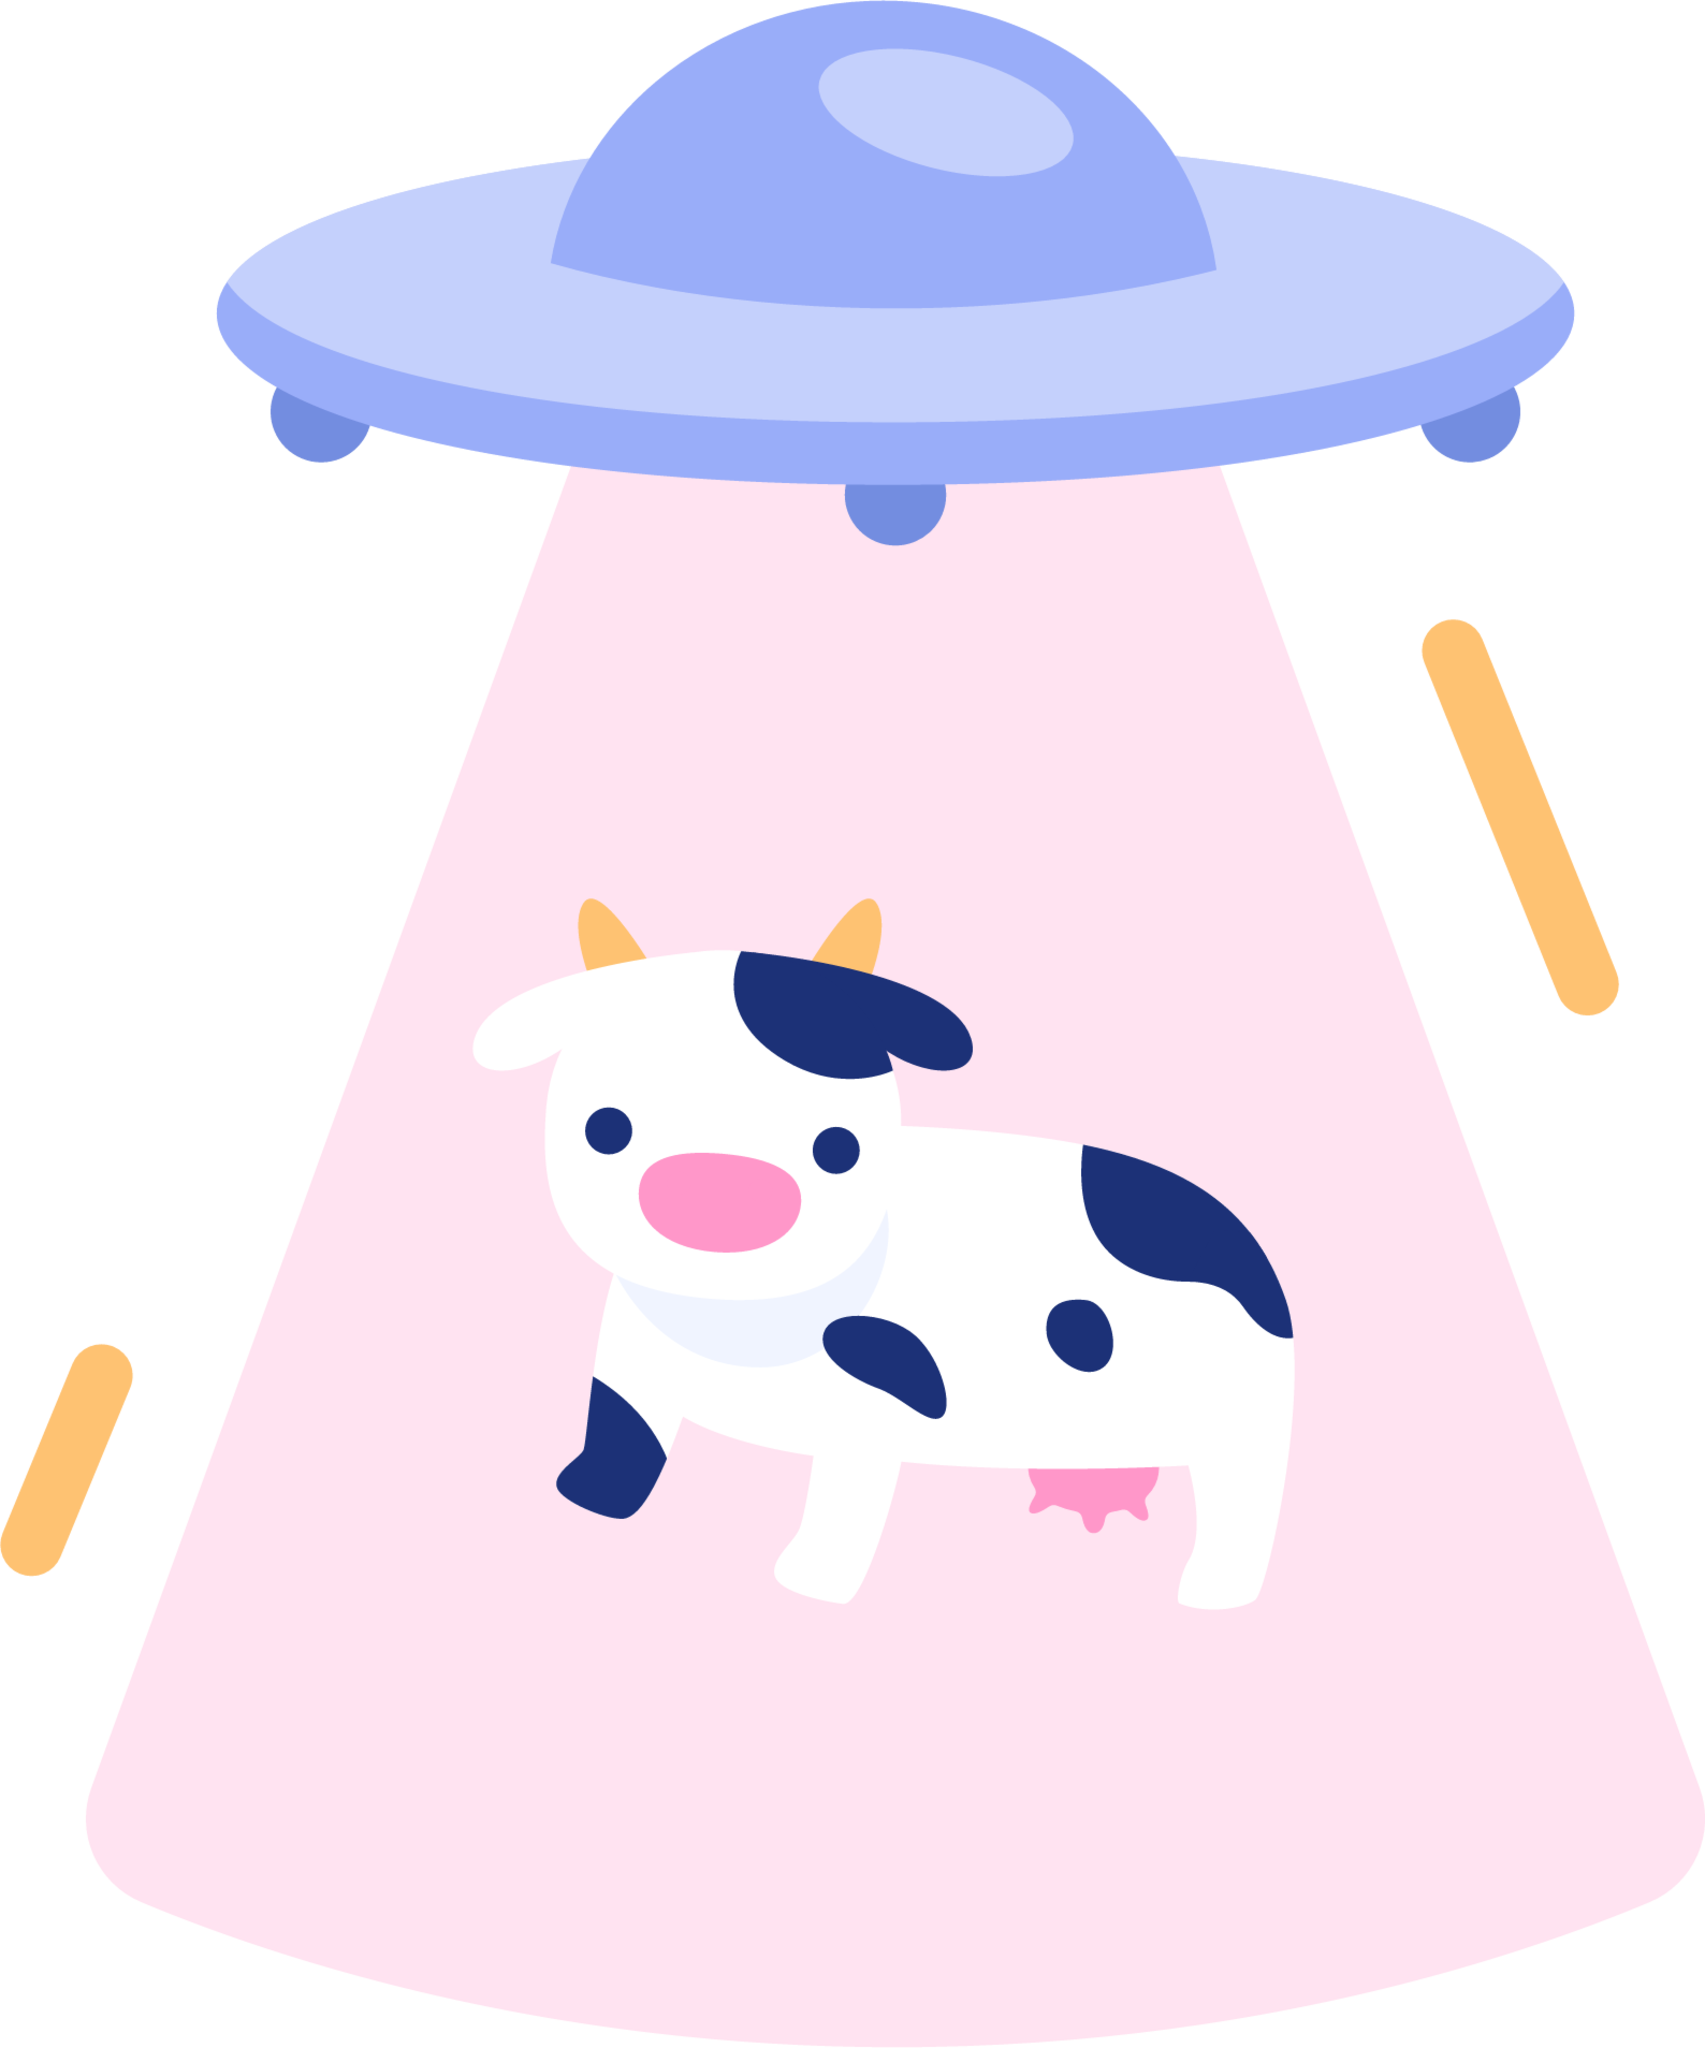 Cow aliens abduction cute cartoon illustration